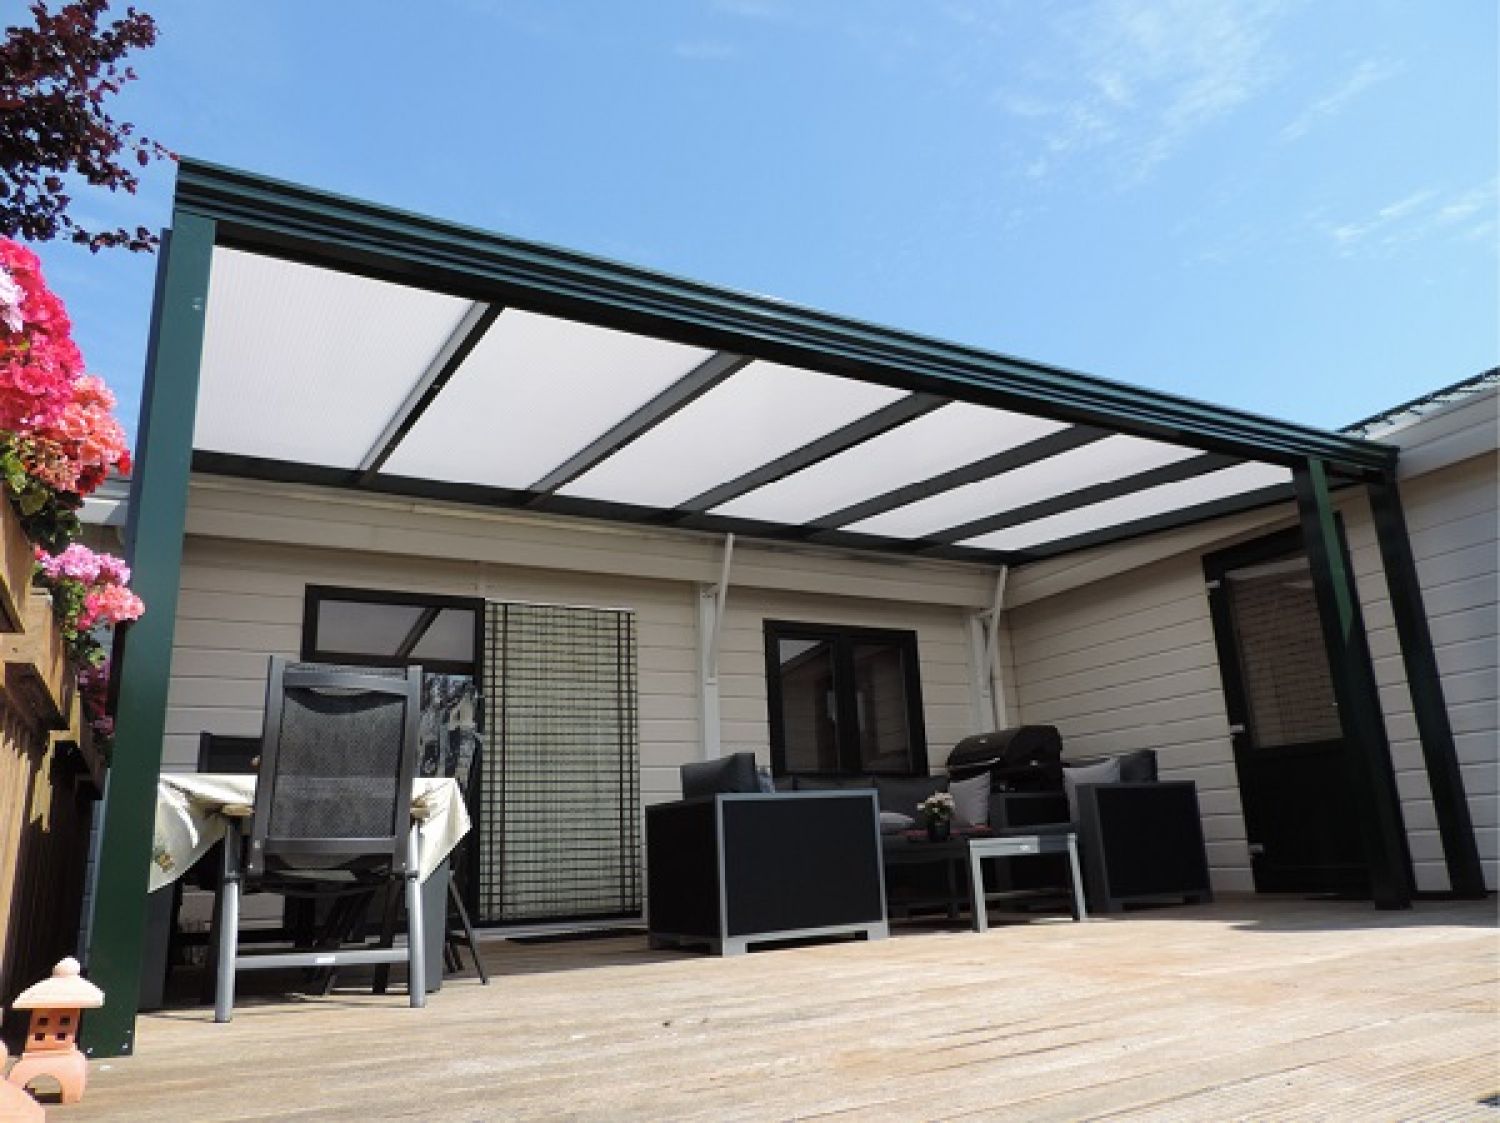 Profiline veranda 700x350 cm - polycarbonaat dak